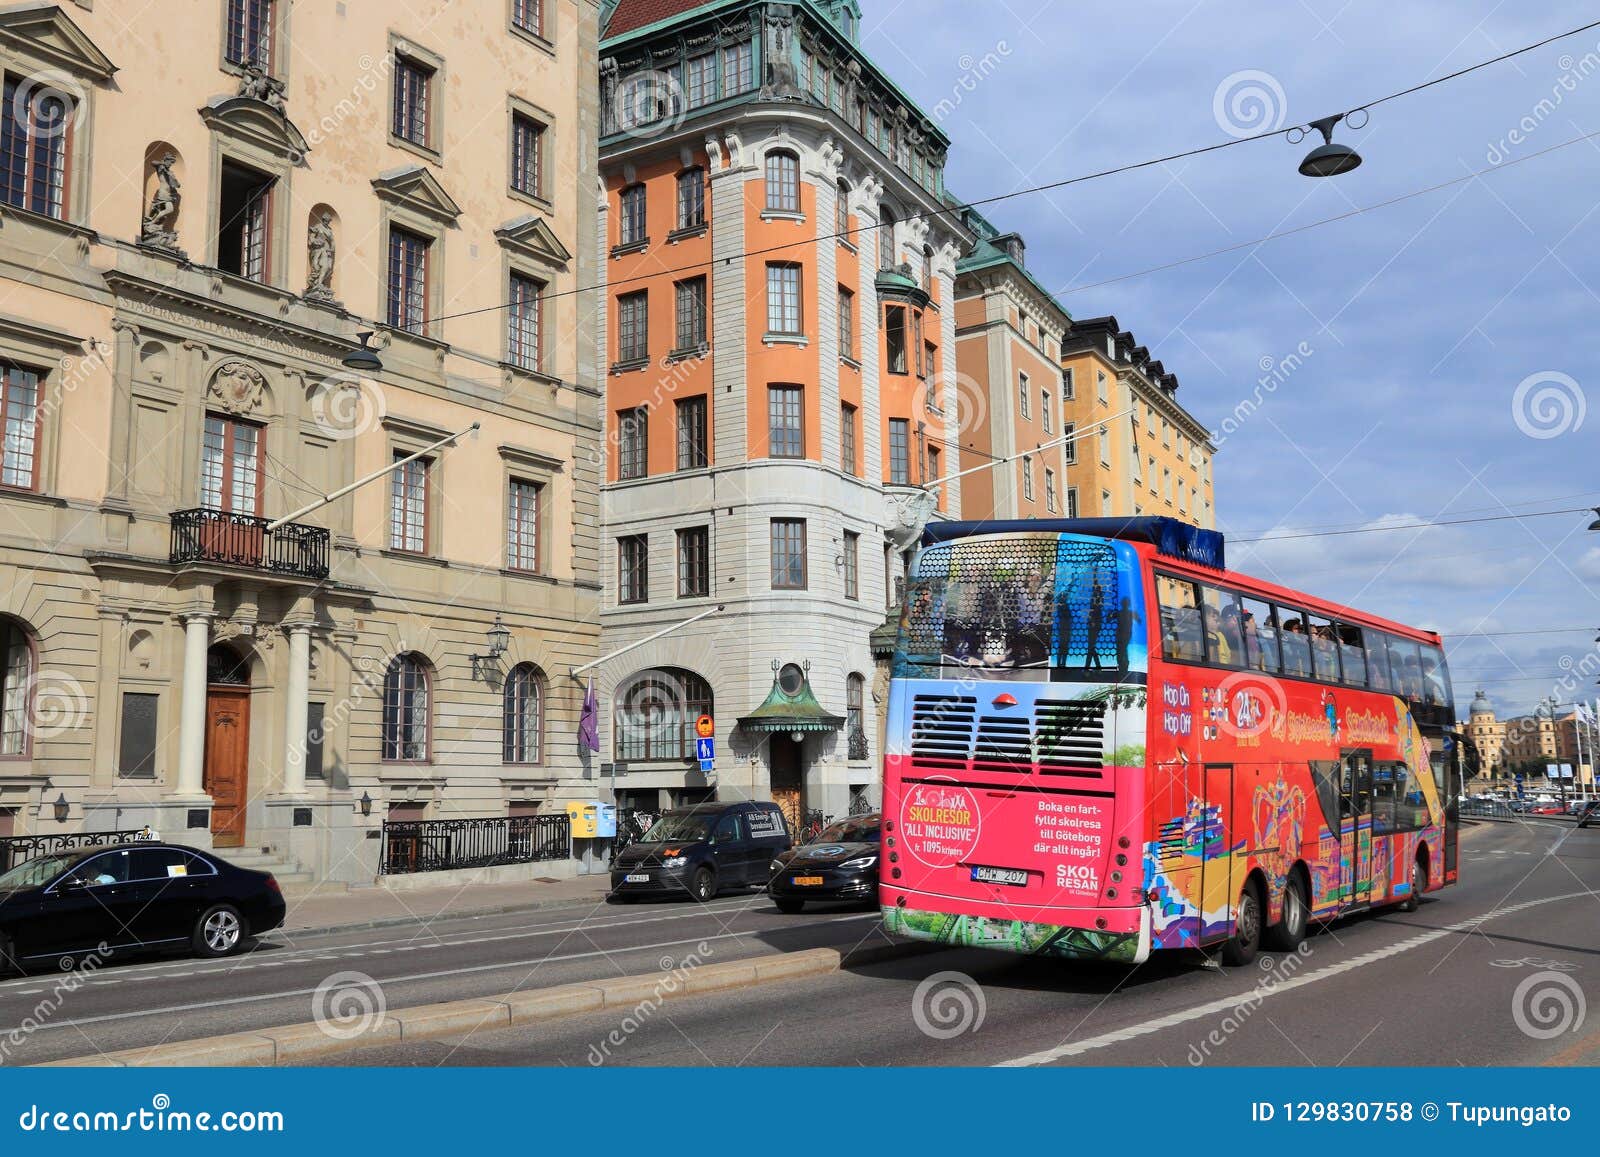 Stockholm bus tour editorial stock photo. Image of city - 129830758